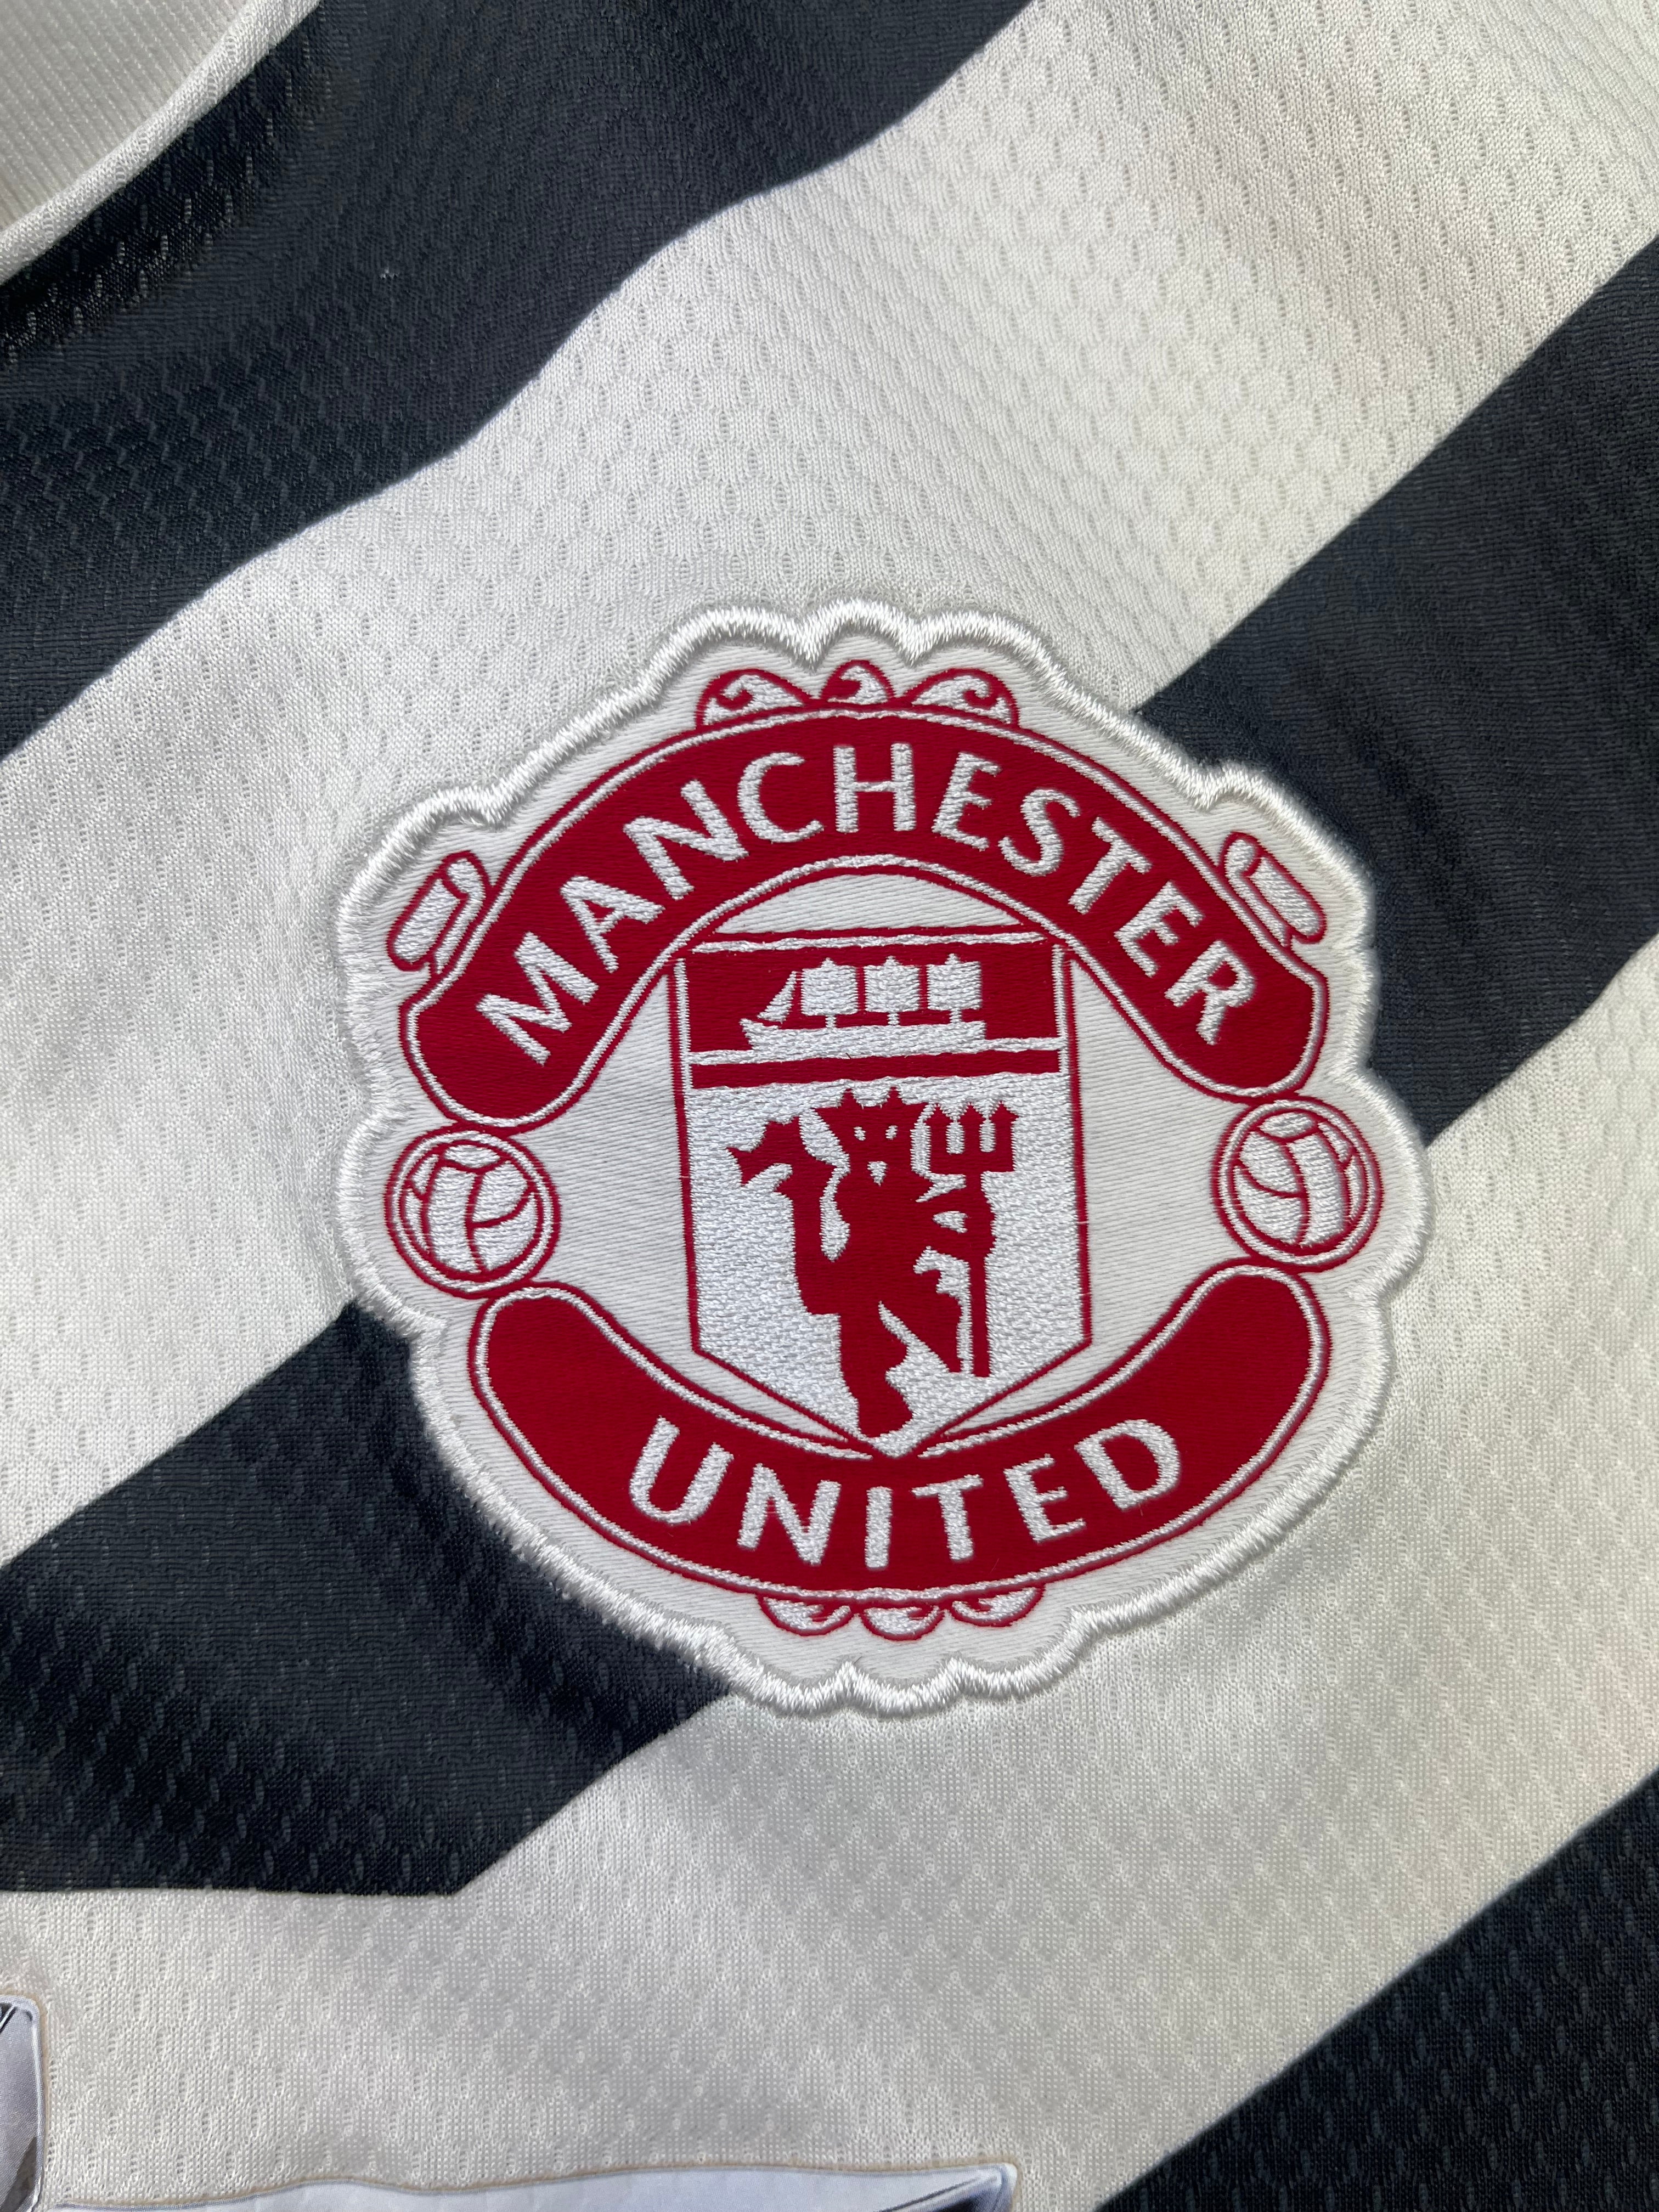 2020/21 Manchester United Third Shirt (L) 7.5/10